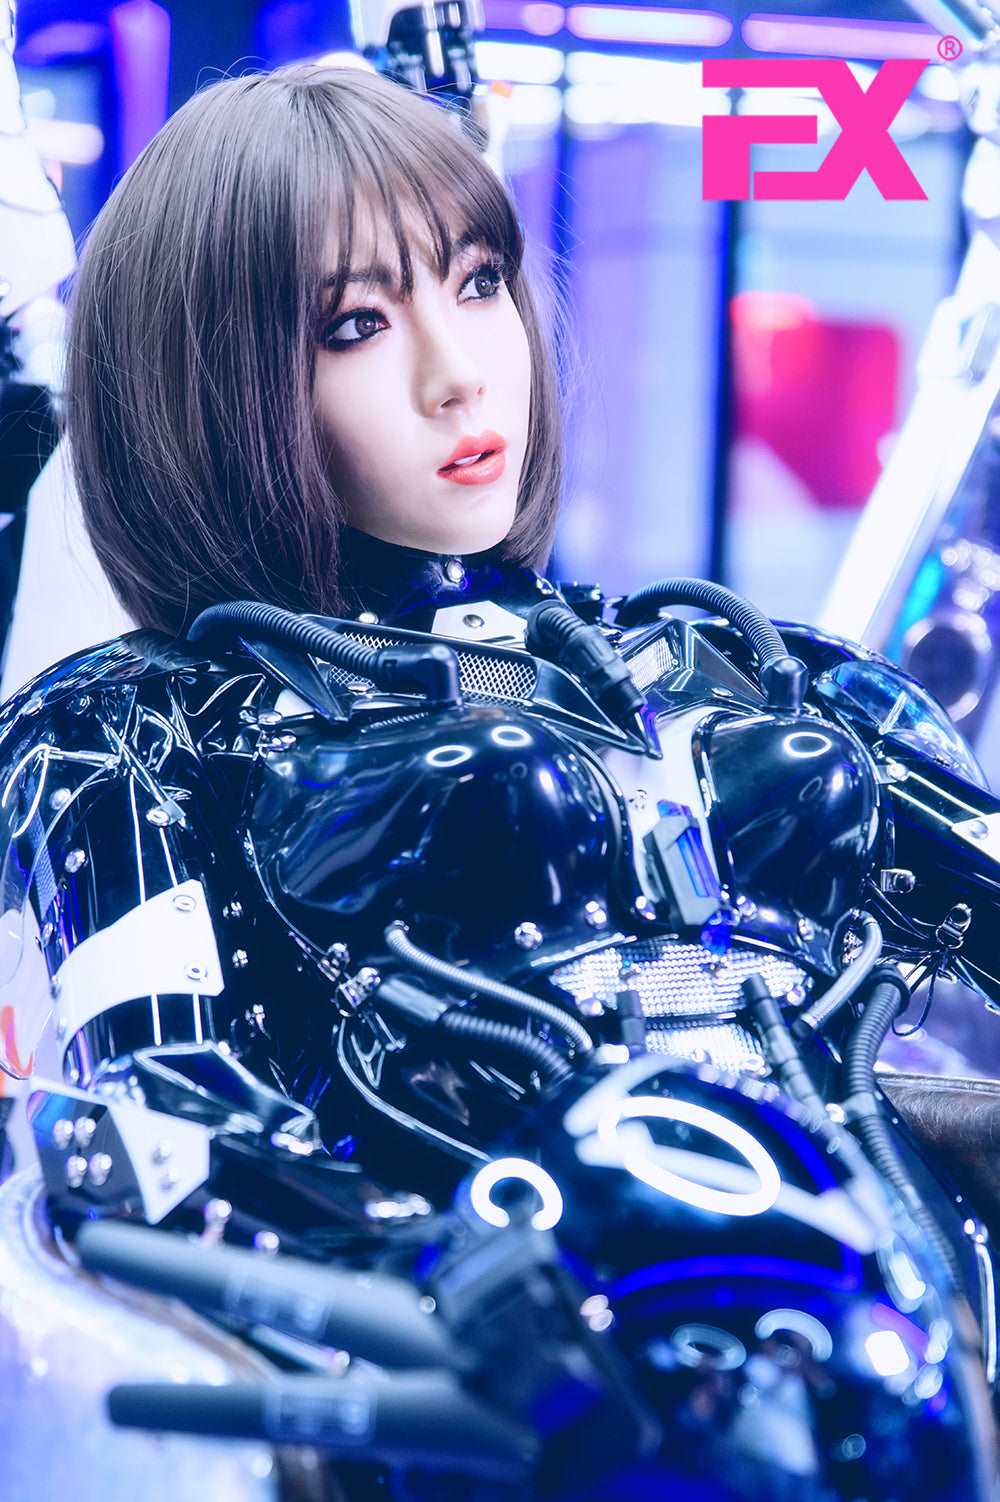 EX Doll Clone Series 162 cm Silicone - Mao | Sex Dolls SG